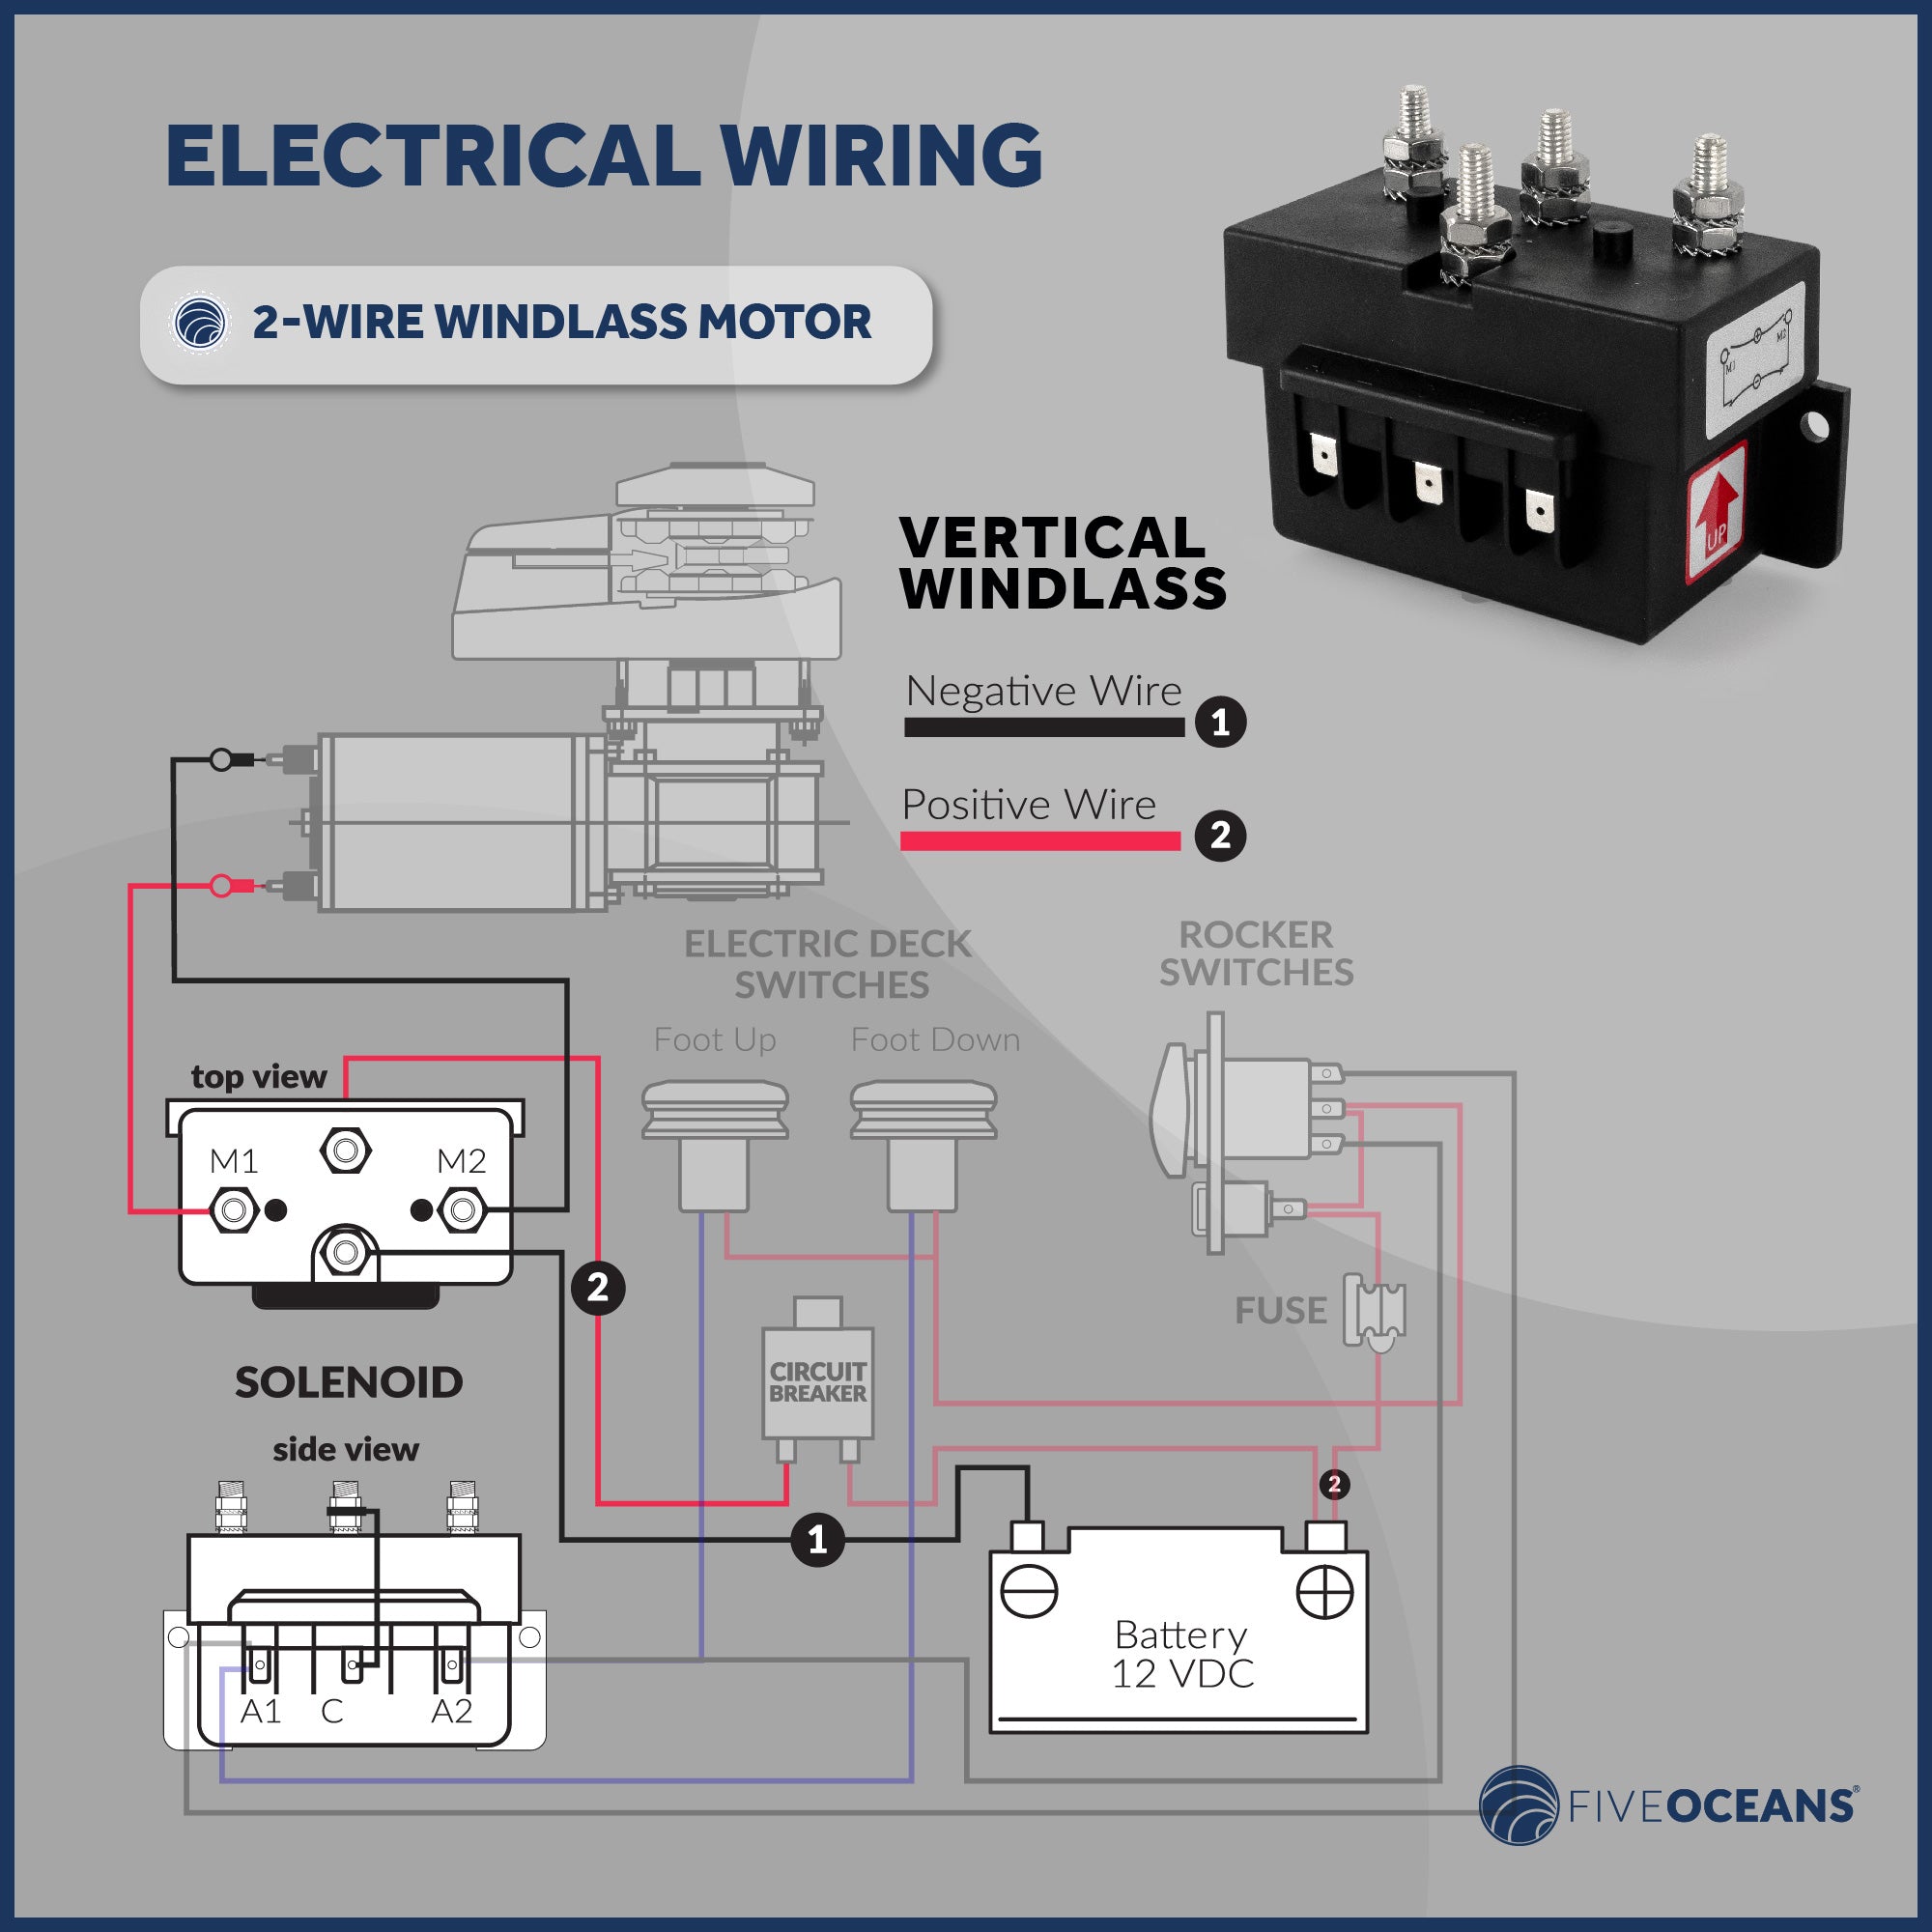 Windlass Solenoid, Control Box 2-Wire Motors, 12V, Up To 1500 Watts - FO3292